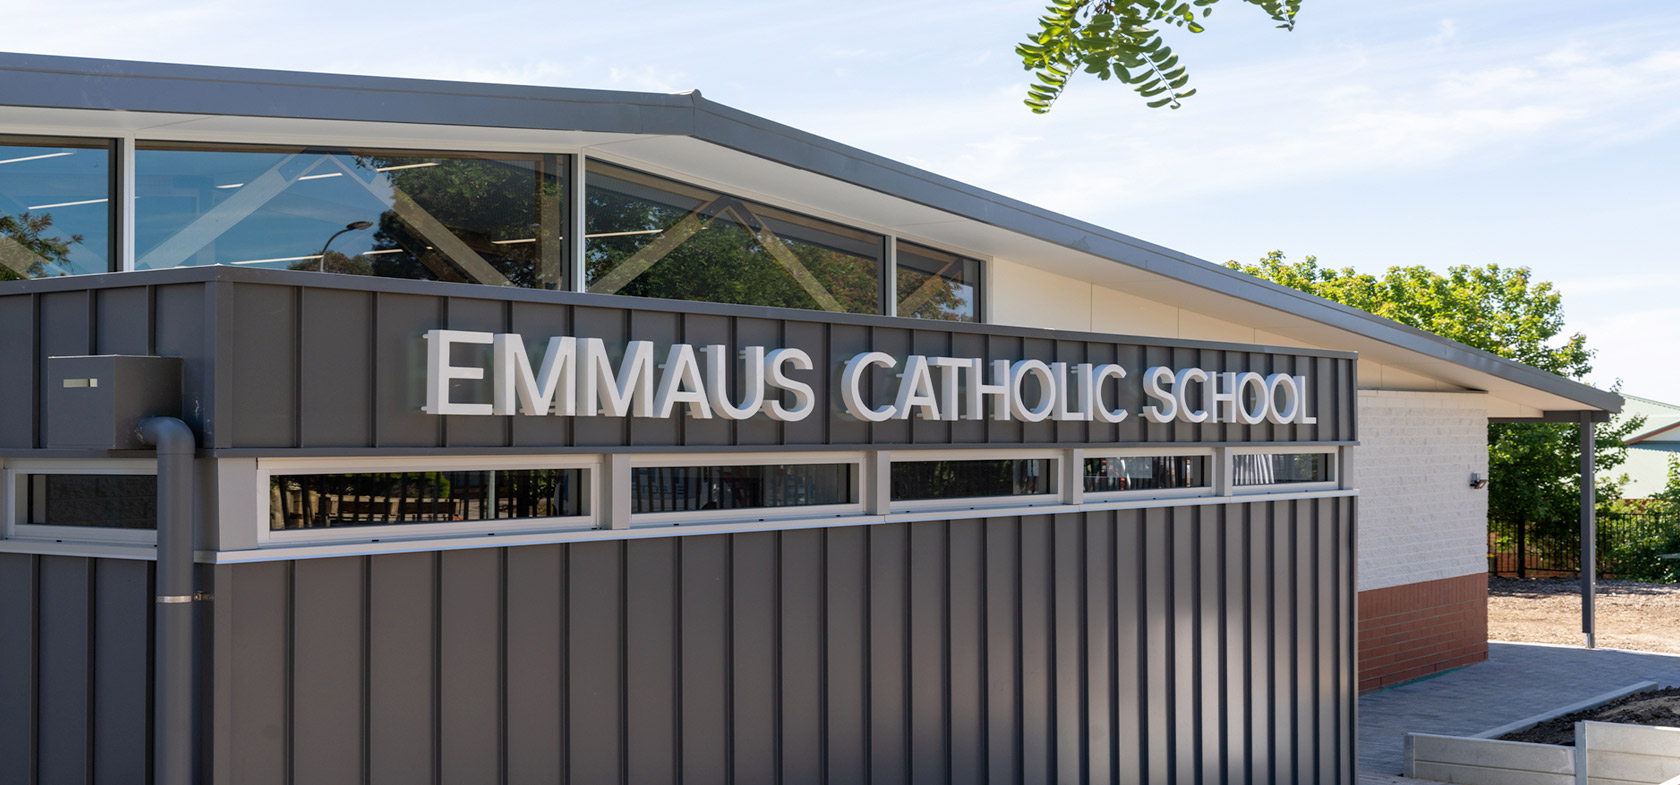 schiavello construction adelaide emmaus catholic primary school education fitout building exterior sign